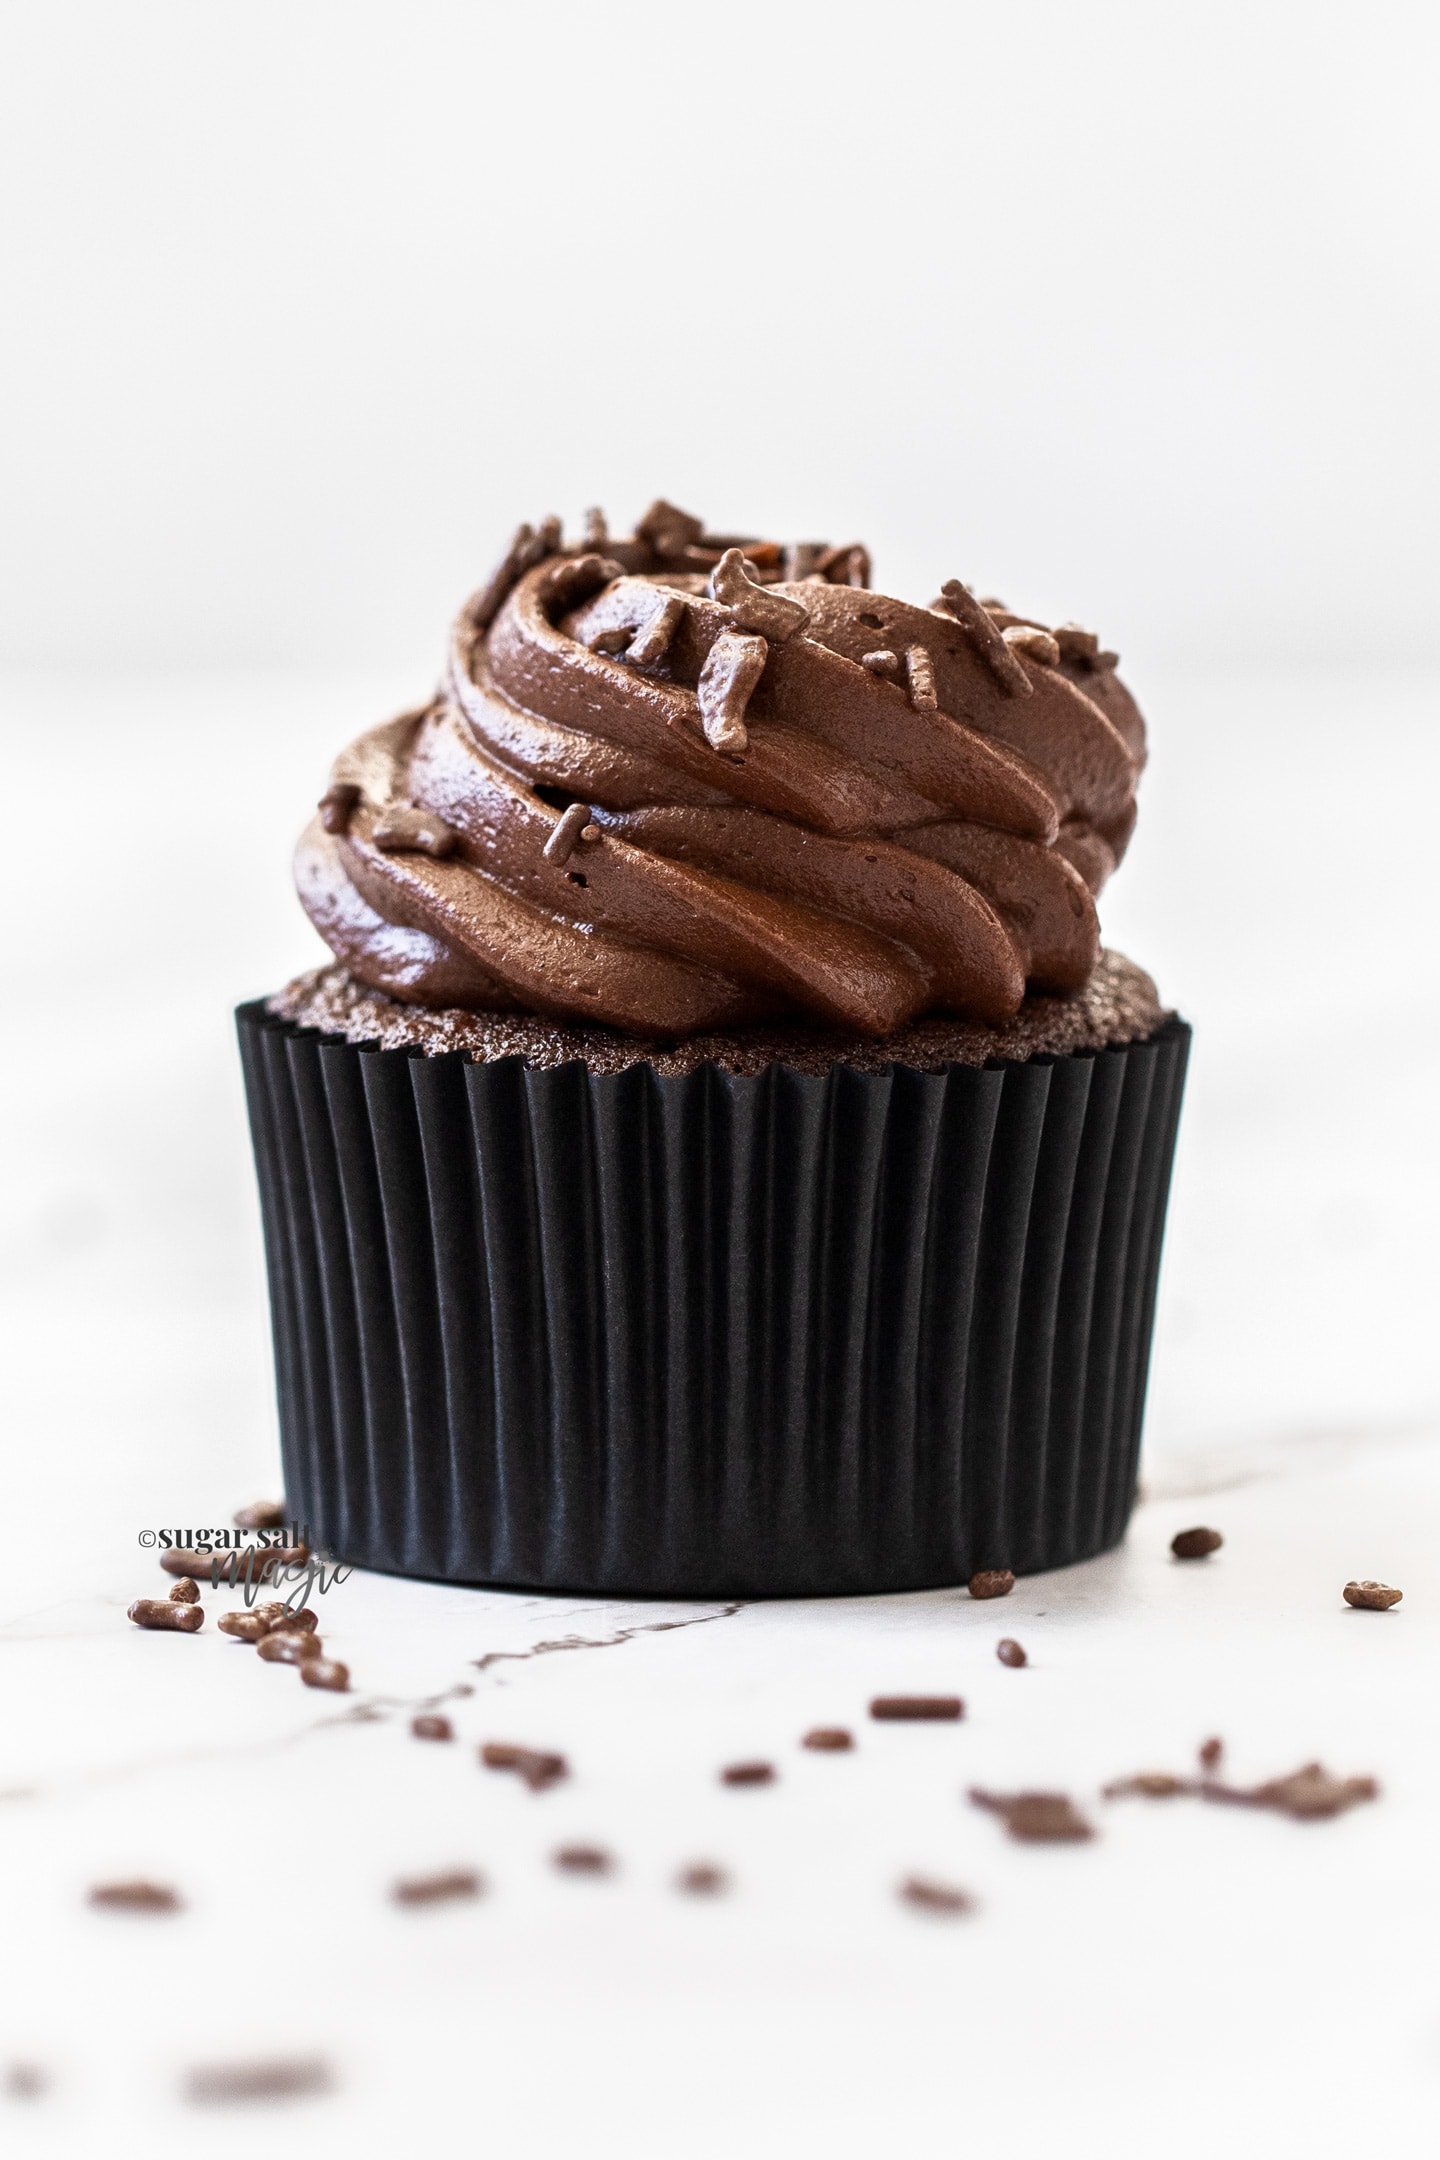 A closeup of a single chocolate cupcake.